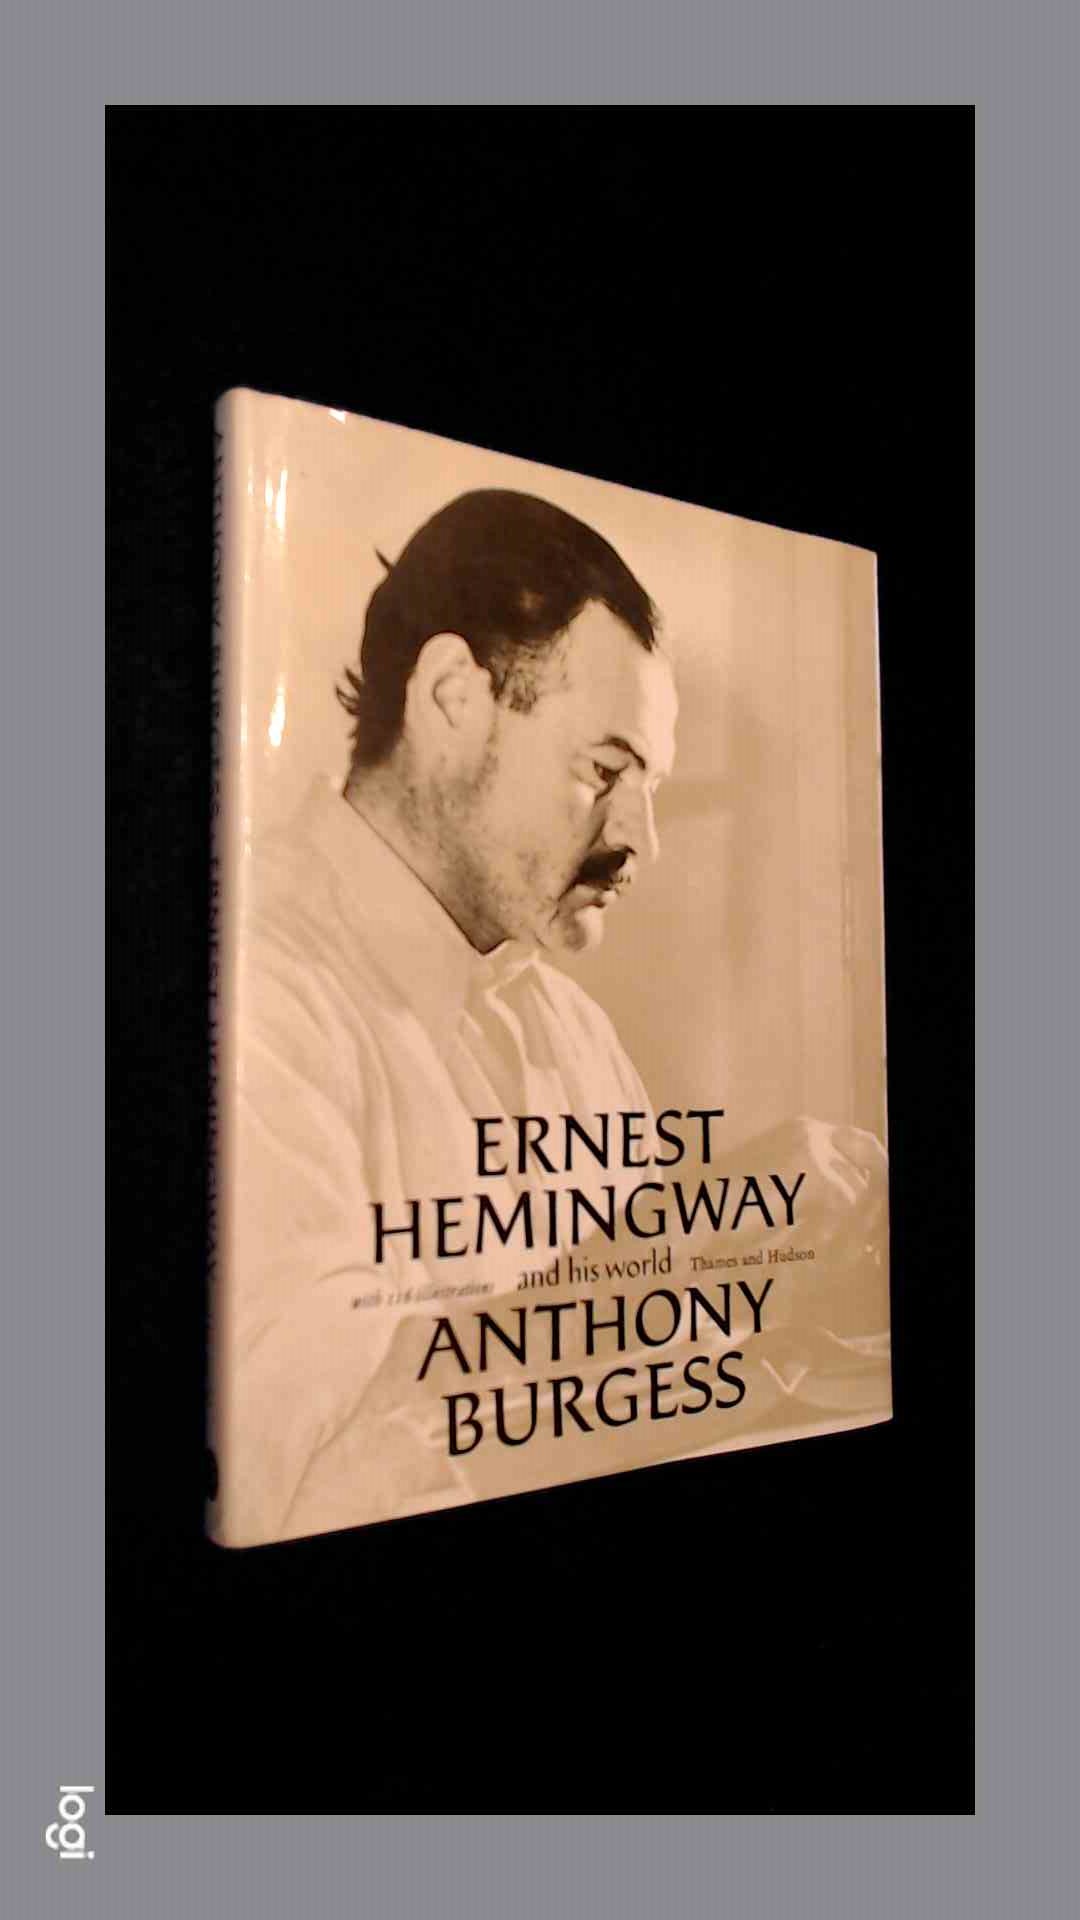 BURGESS, ANTHONY - Ernest Hemingway and his world